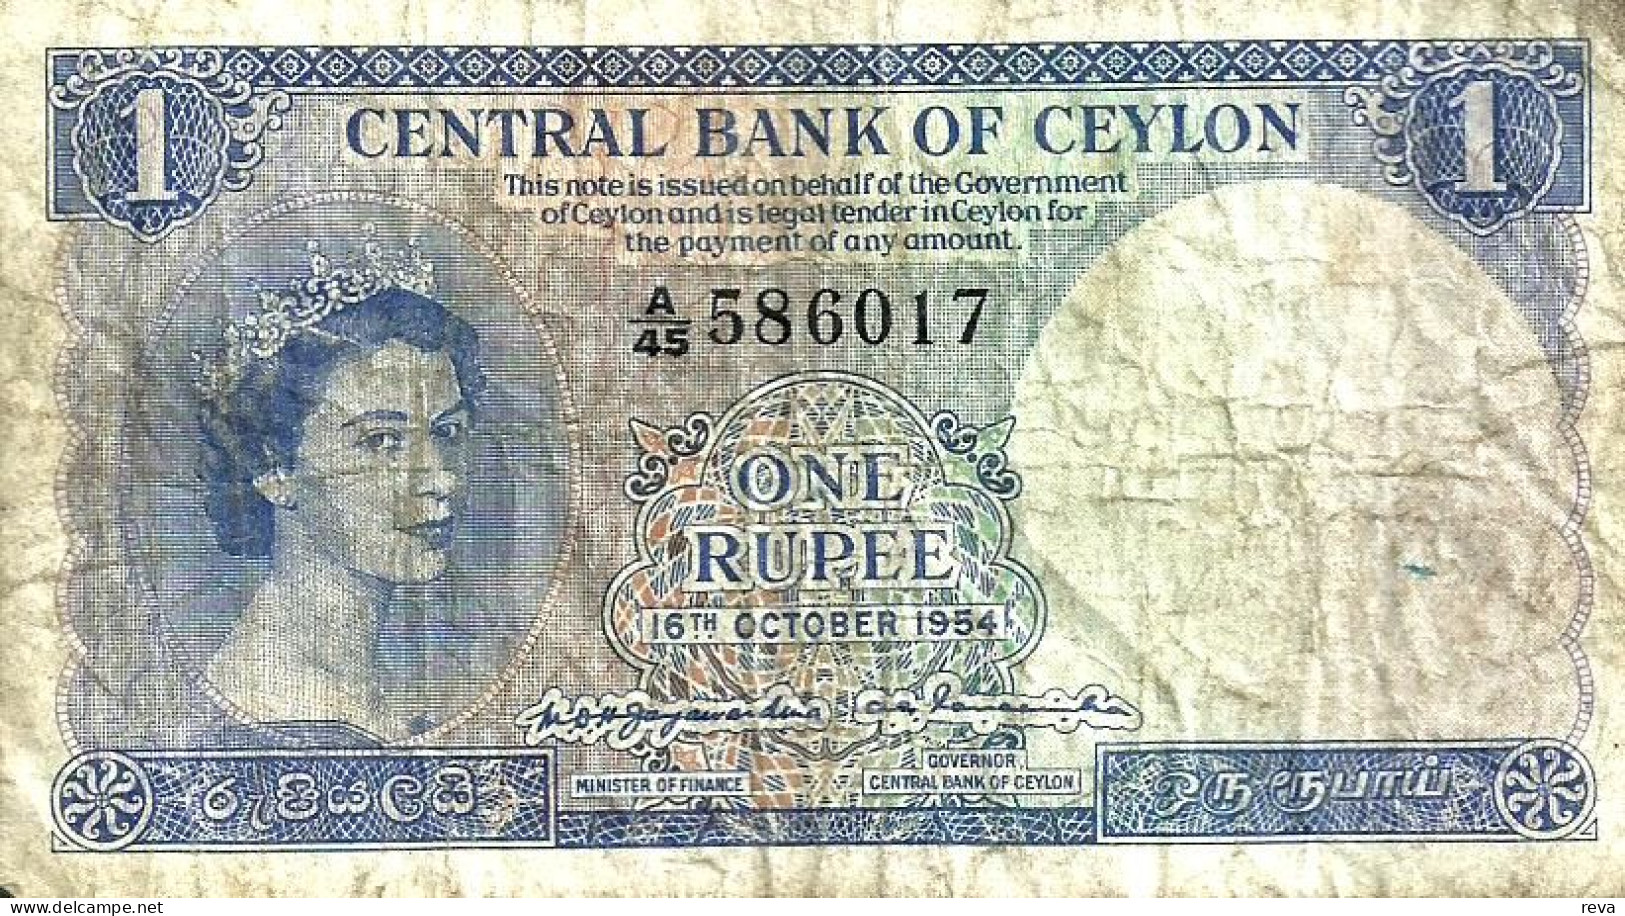 SRI LANKA CEYLON 1 RUPEE BLUE QEII WOMAN FRONT & BUILDING BACK DATED 16-10-1954 P.49 F+ READ DESCRIPTION CAREFULLY !!! - Sri Lanka